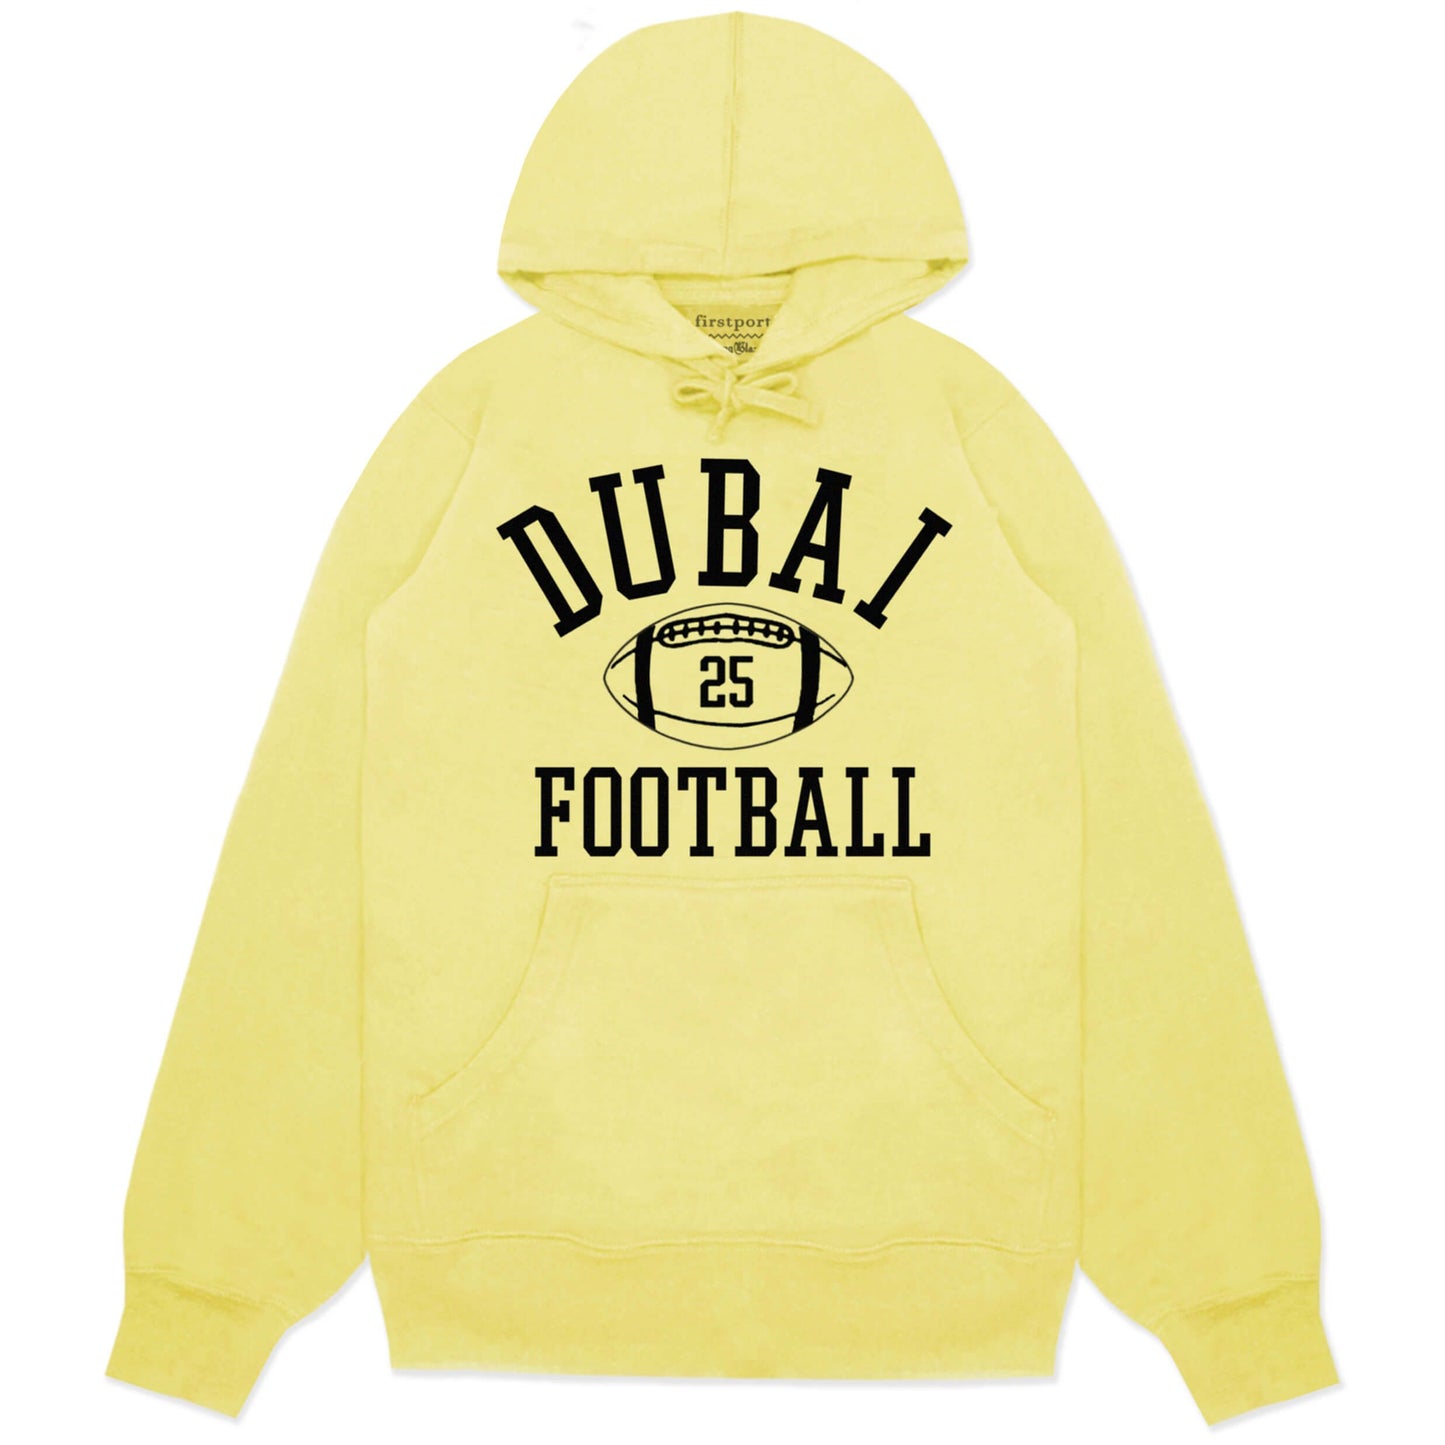 Dubai Football Hooded Sweatshirt